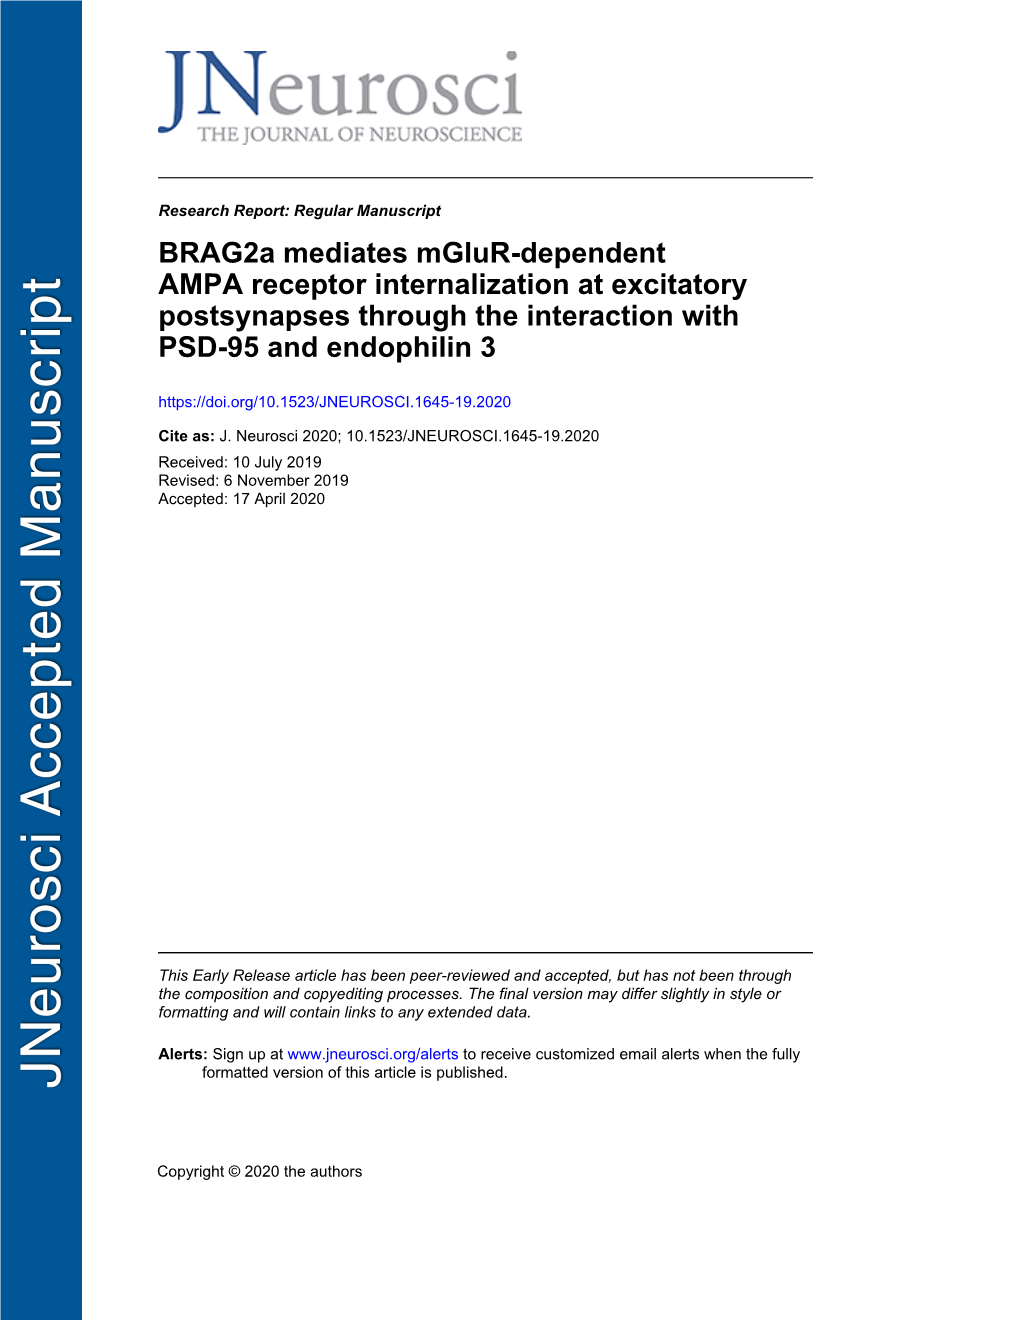 Brag2a Mediates Mglur-Dependent AMPA Receptor Internalization At